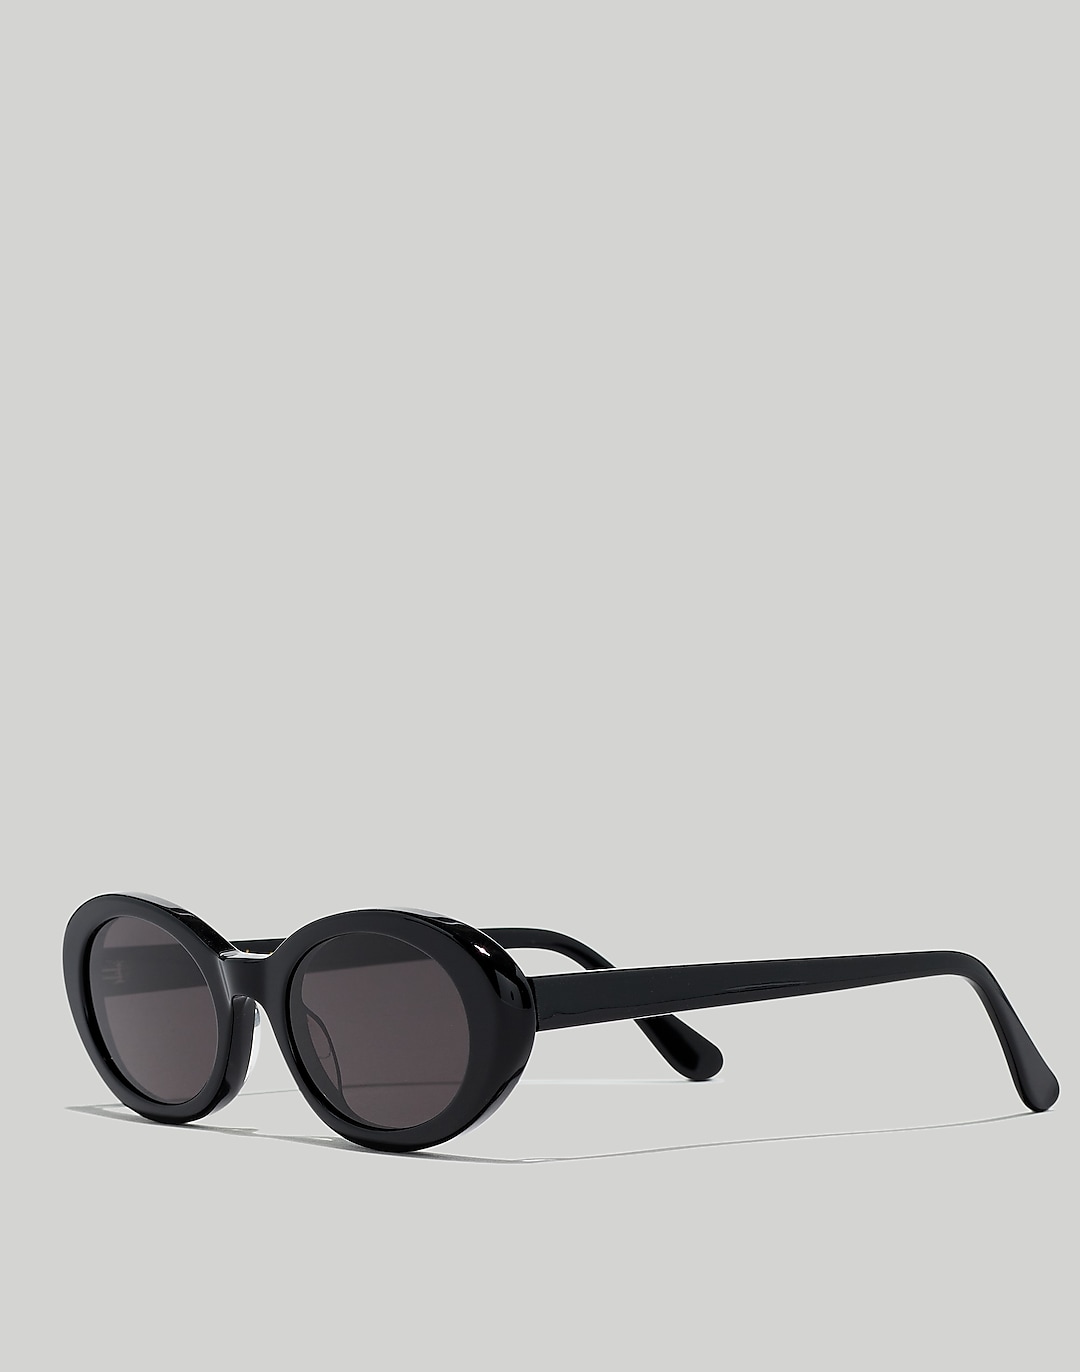 Russell Oval Sunglasses | Madewell